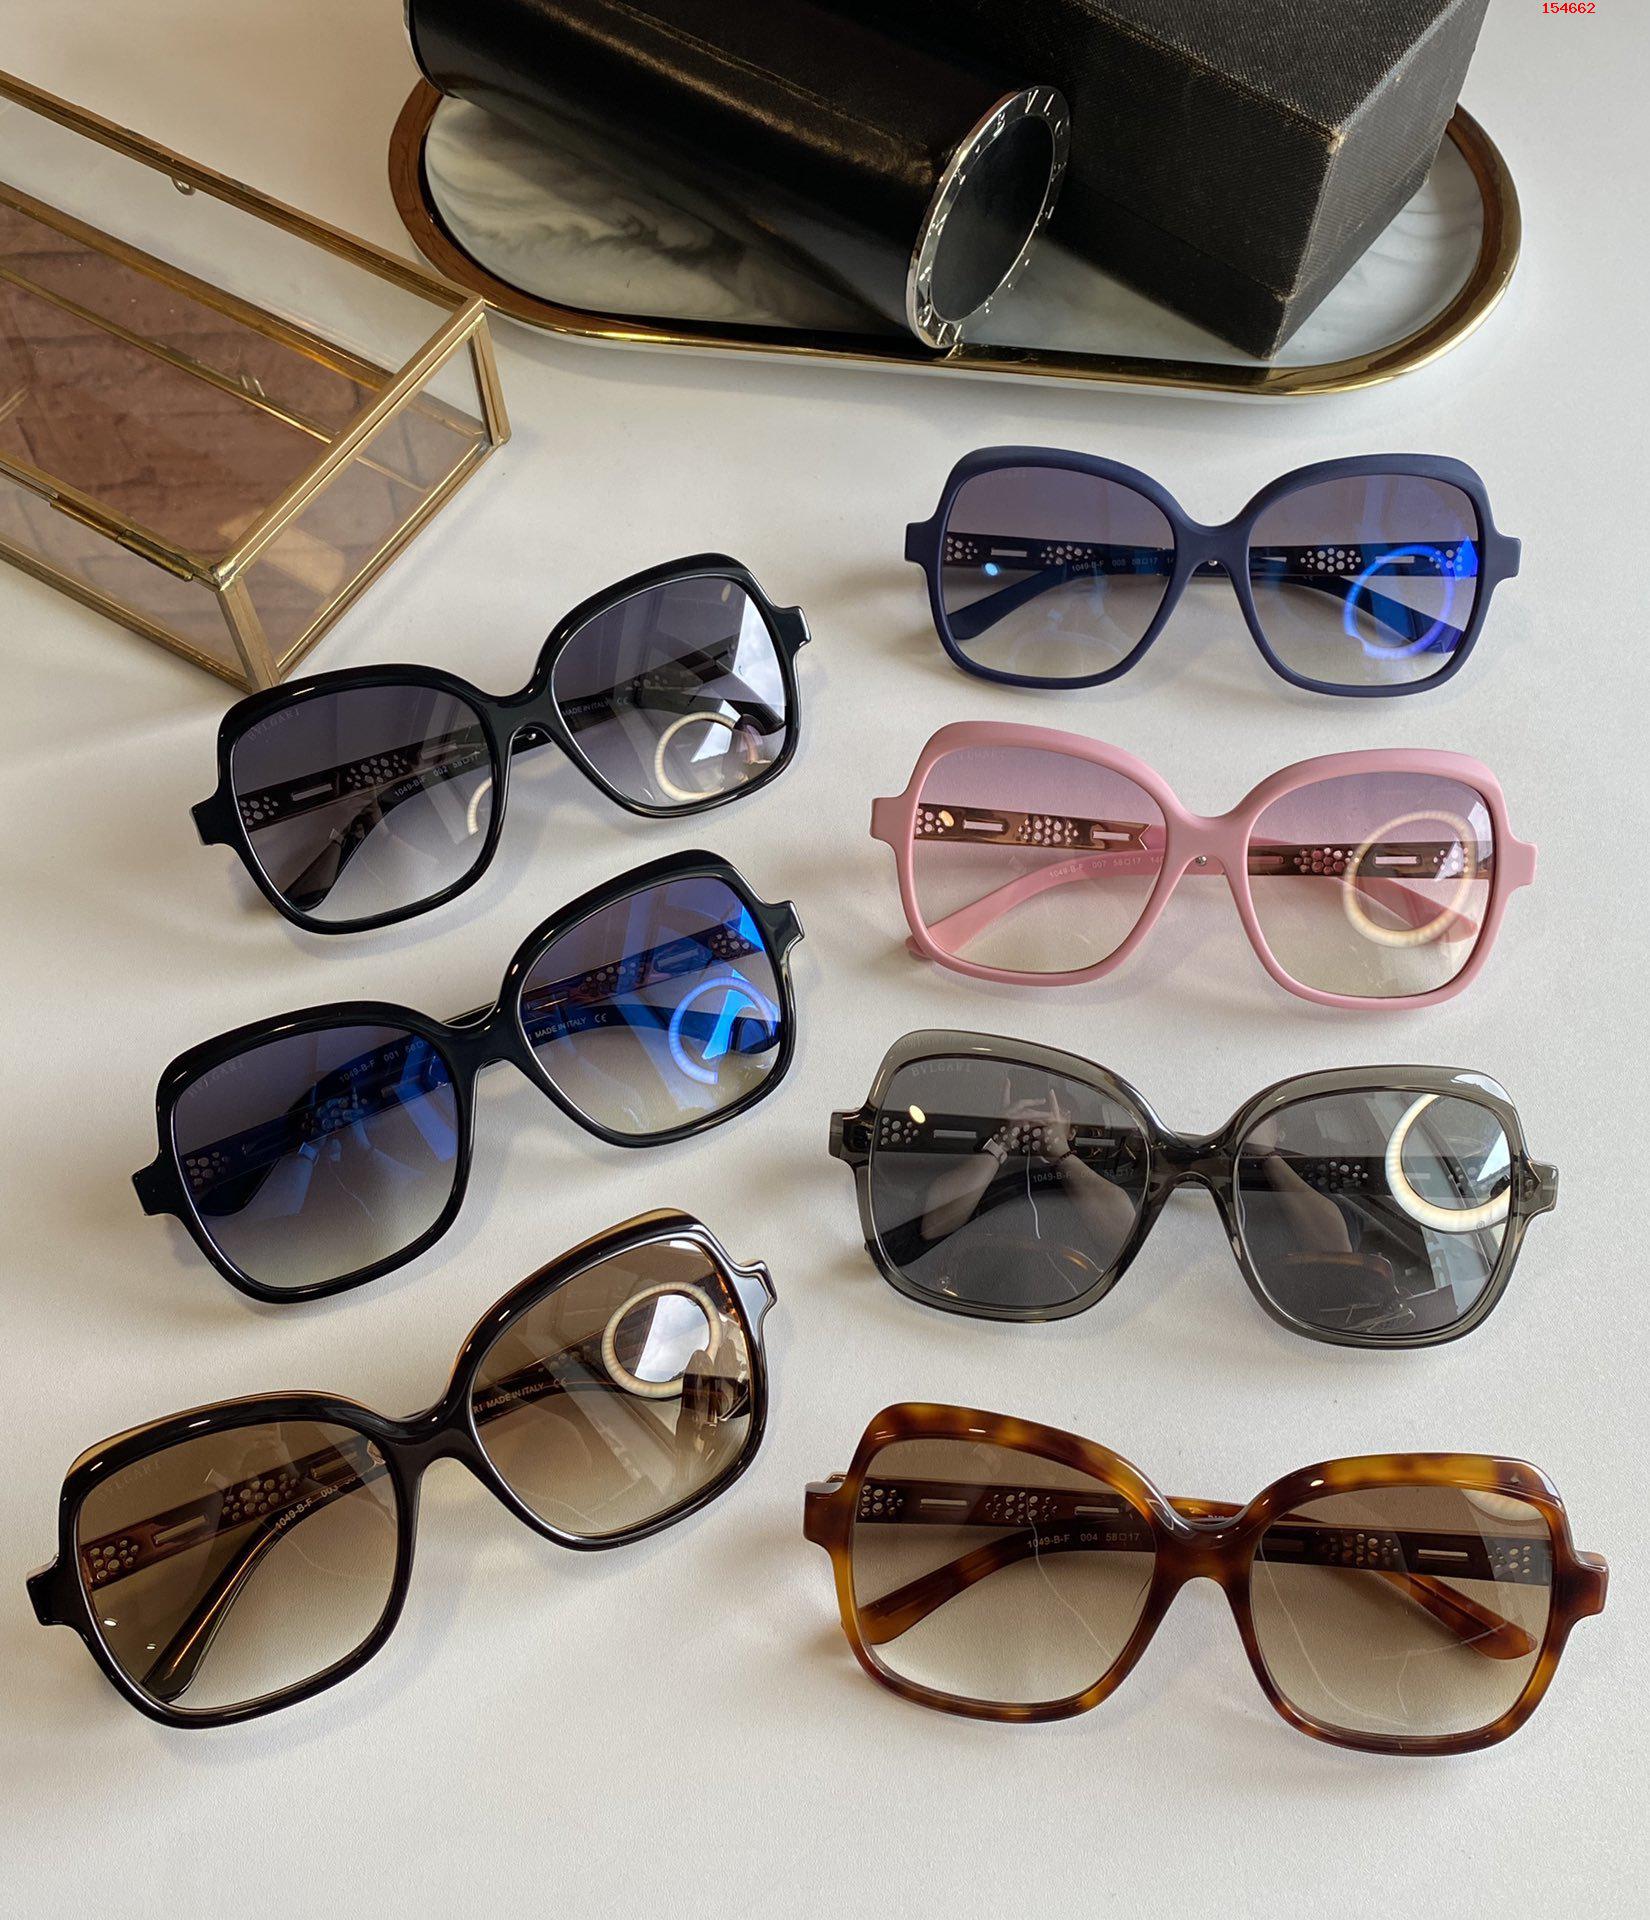 BVLGAR Model:BV 高仿名牌眼镜/太阳镜 精仿名牌眼镜/太阳镜 原版名牌眼镜/太阳镜 A货名牌眼镜/太阳镜 原单名牌眼镜/太阳镜 